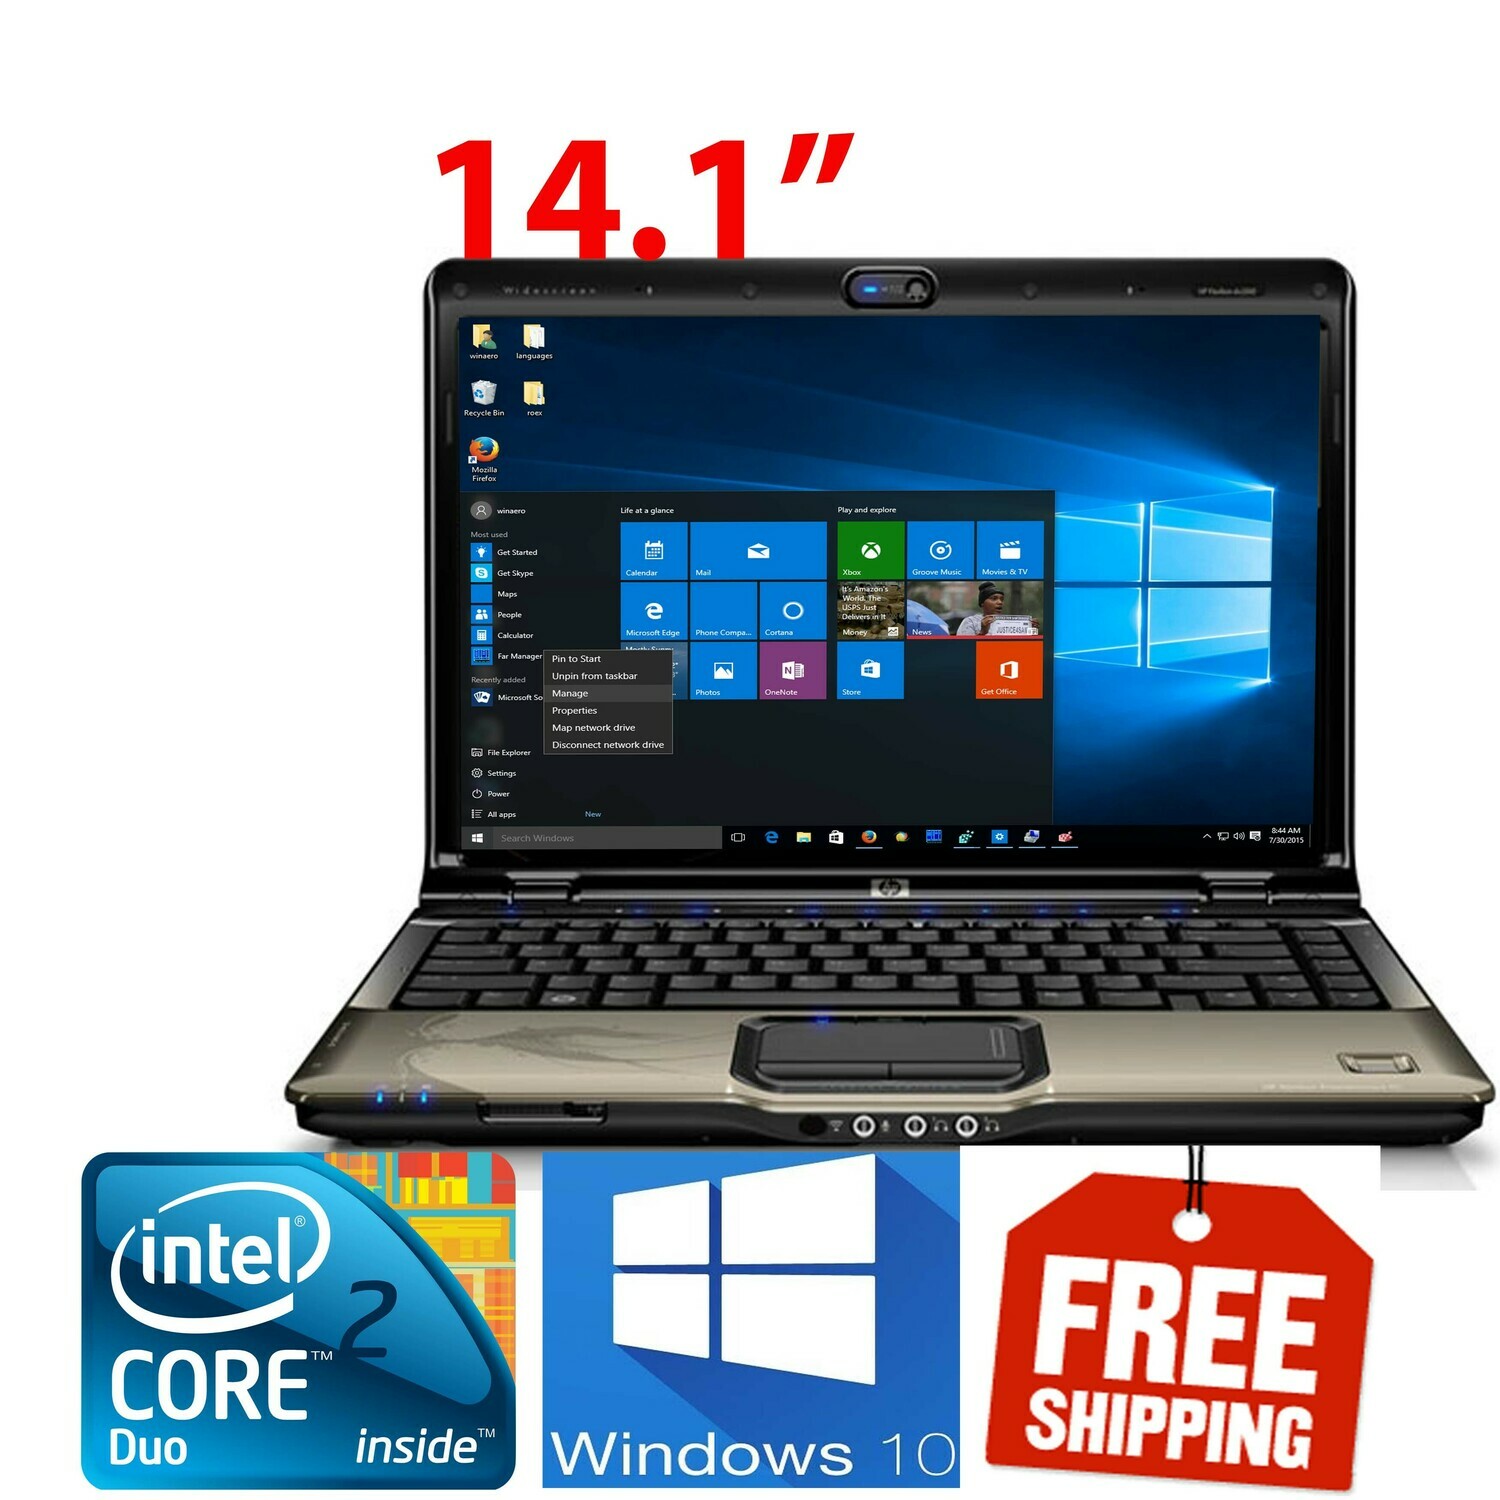 HP pavilion DV2000 C2D-T7500 2 GB 160 GB-14.1" HD Graphics Notebook Laptop Win7